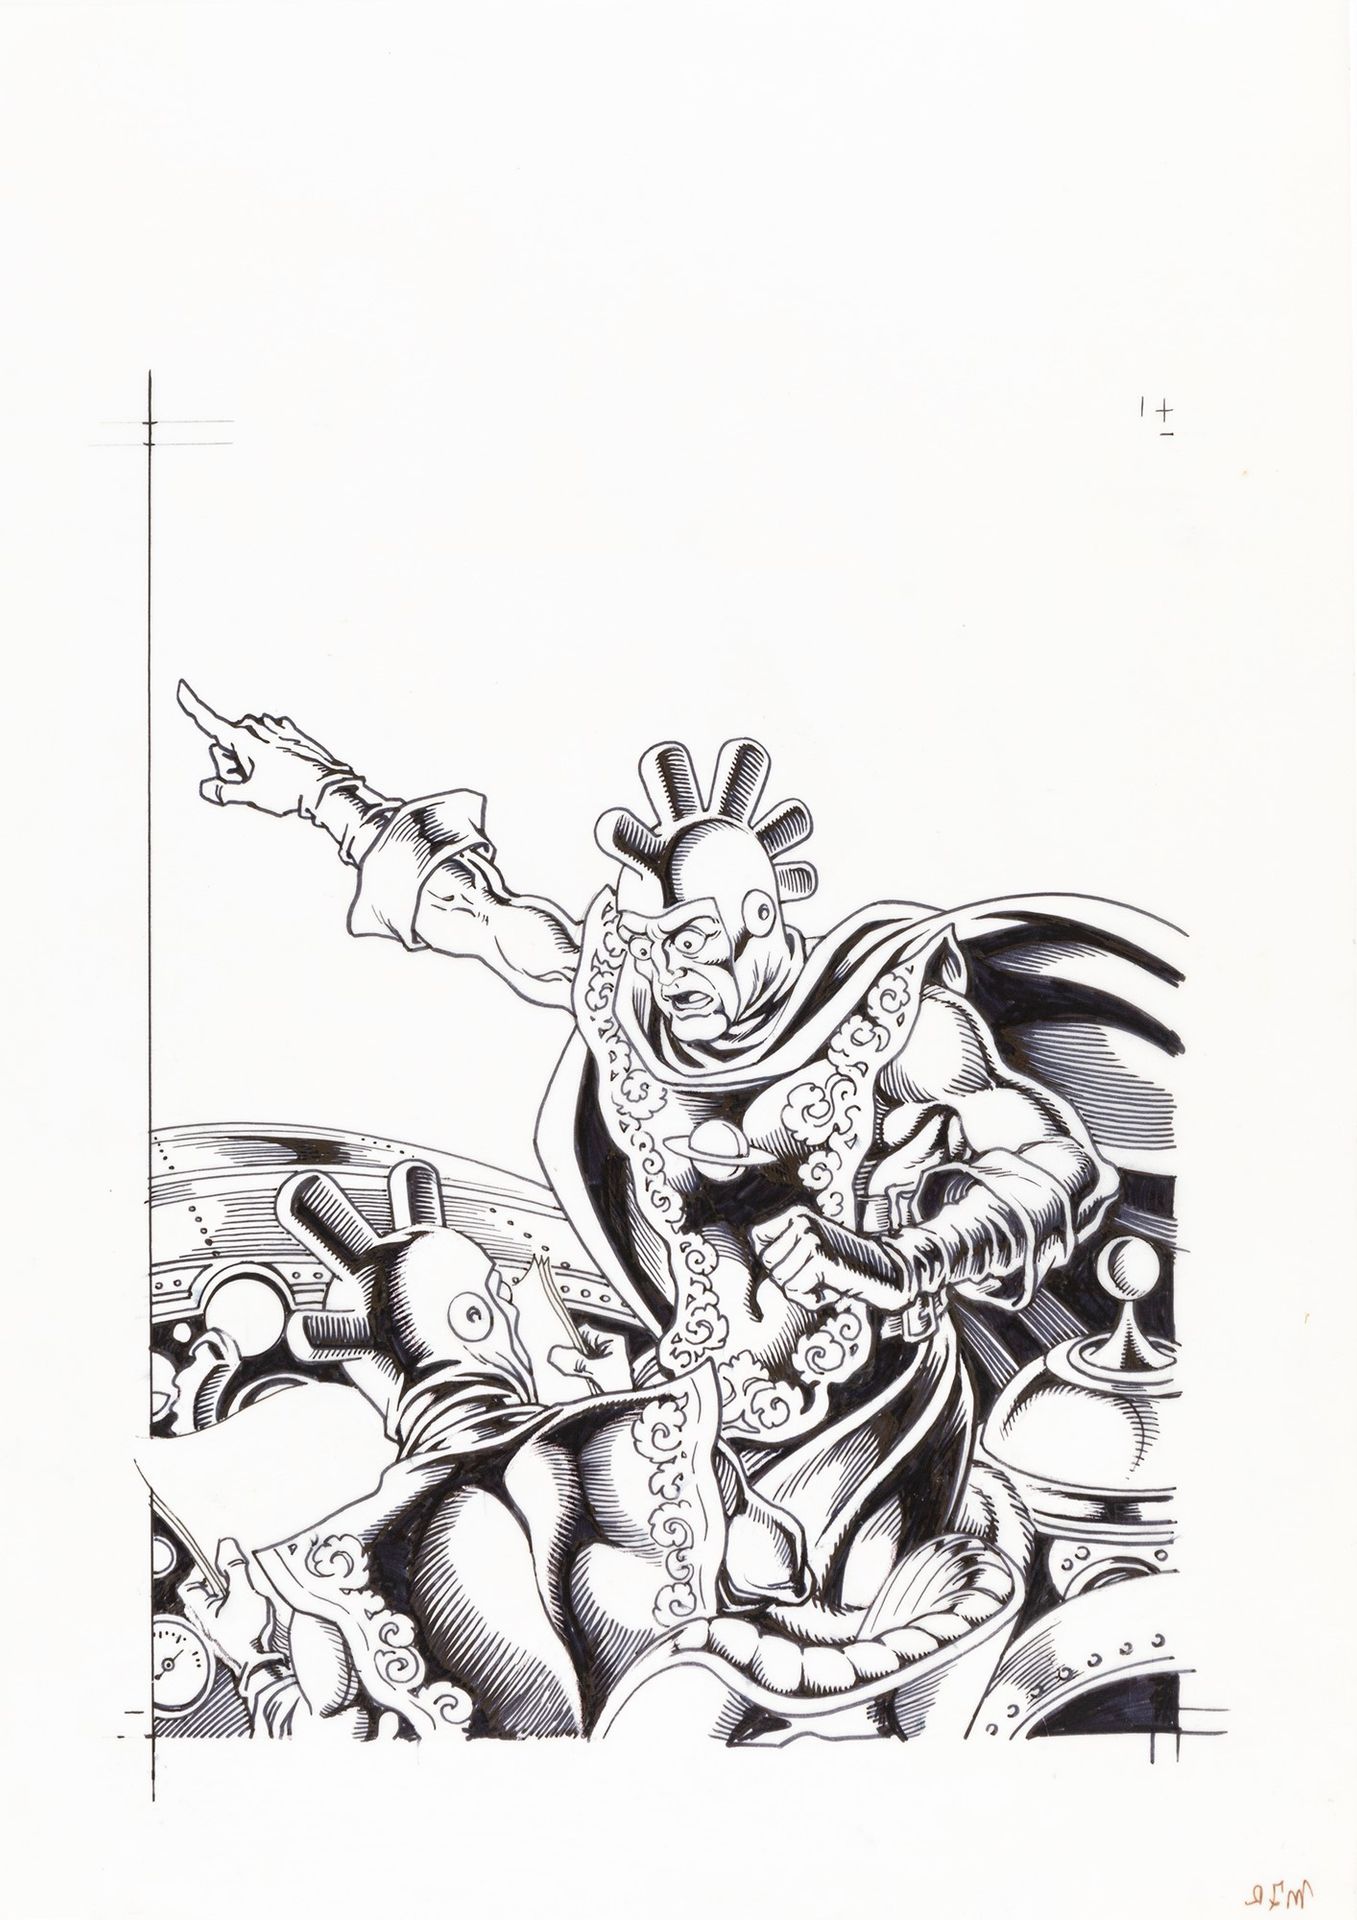 MAGNUS (ROBERTO RAVIOLA) Comic Art n. 77, 1991

ink and felt-tip pen on tracing &hellip;